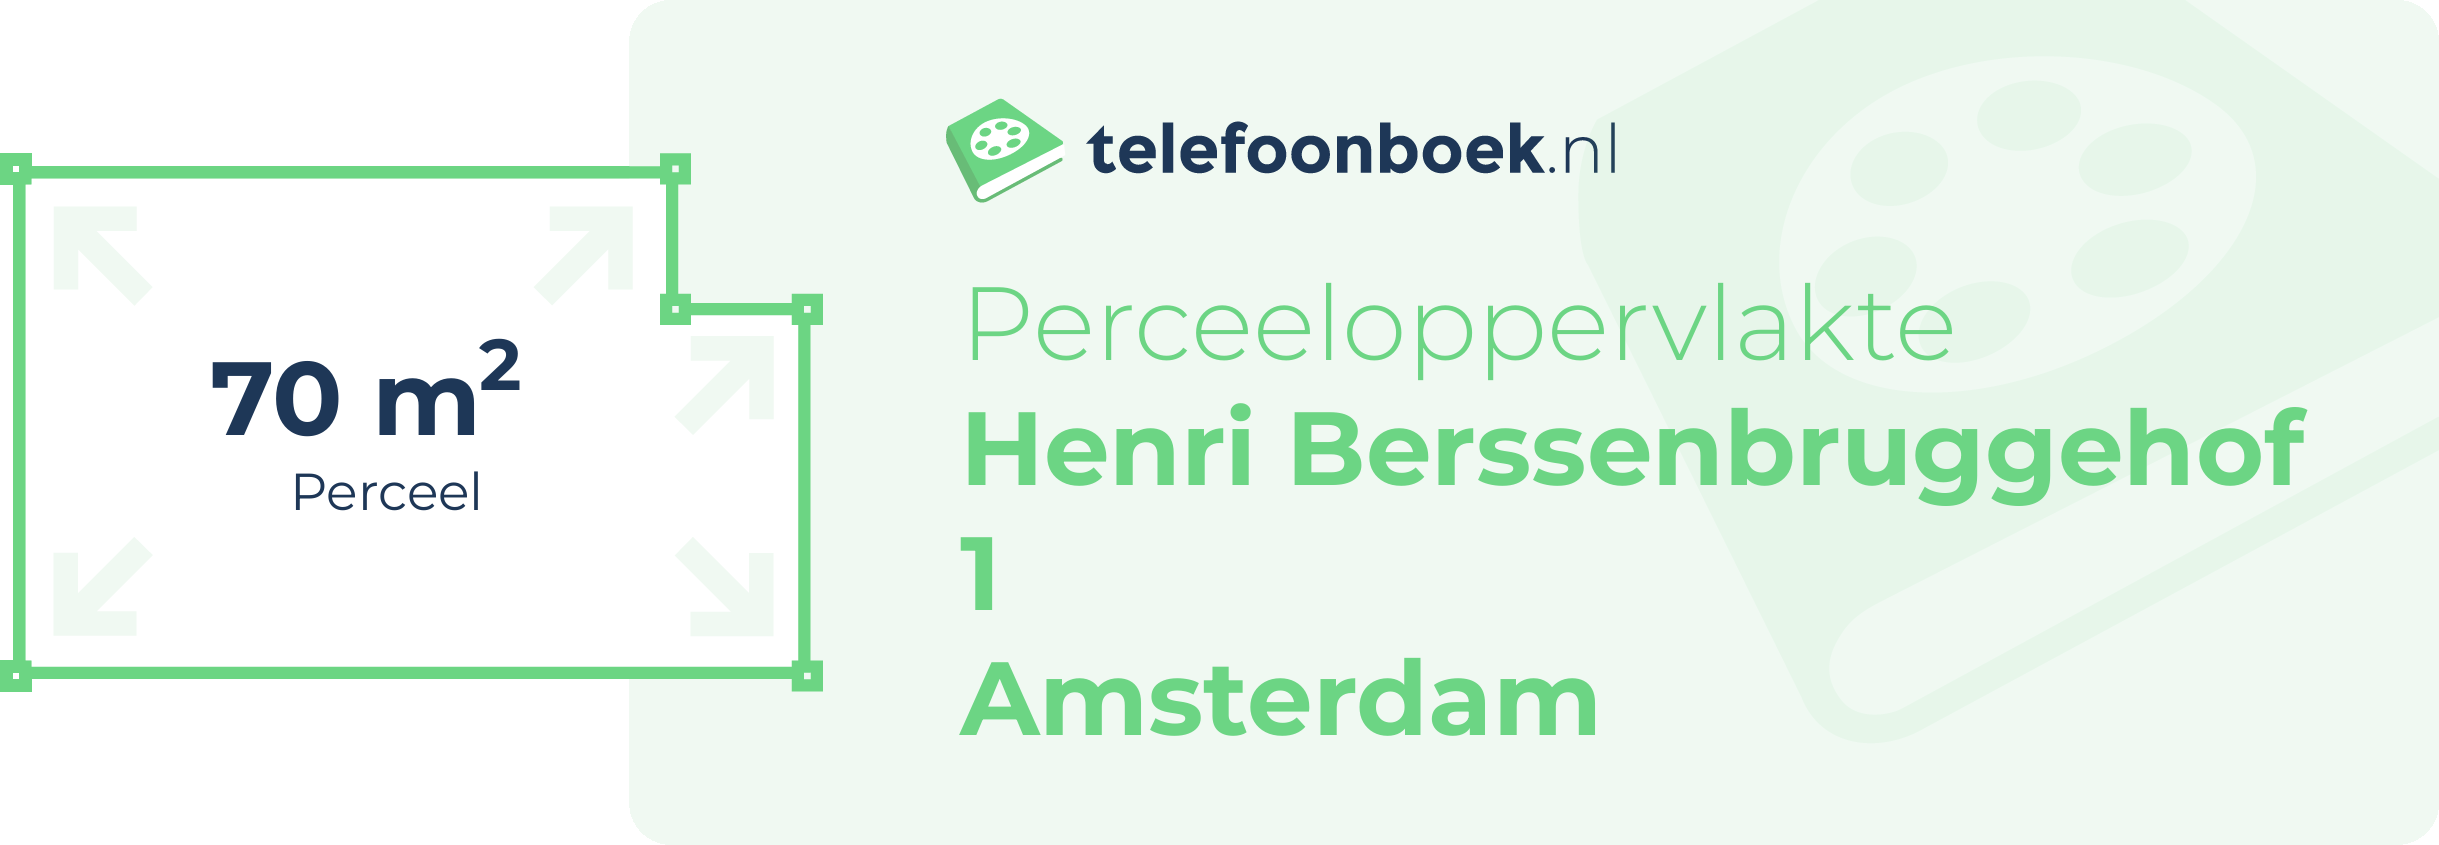 Perceeloppervlakte Henri Berssenbruggehof 1 Amsterdam